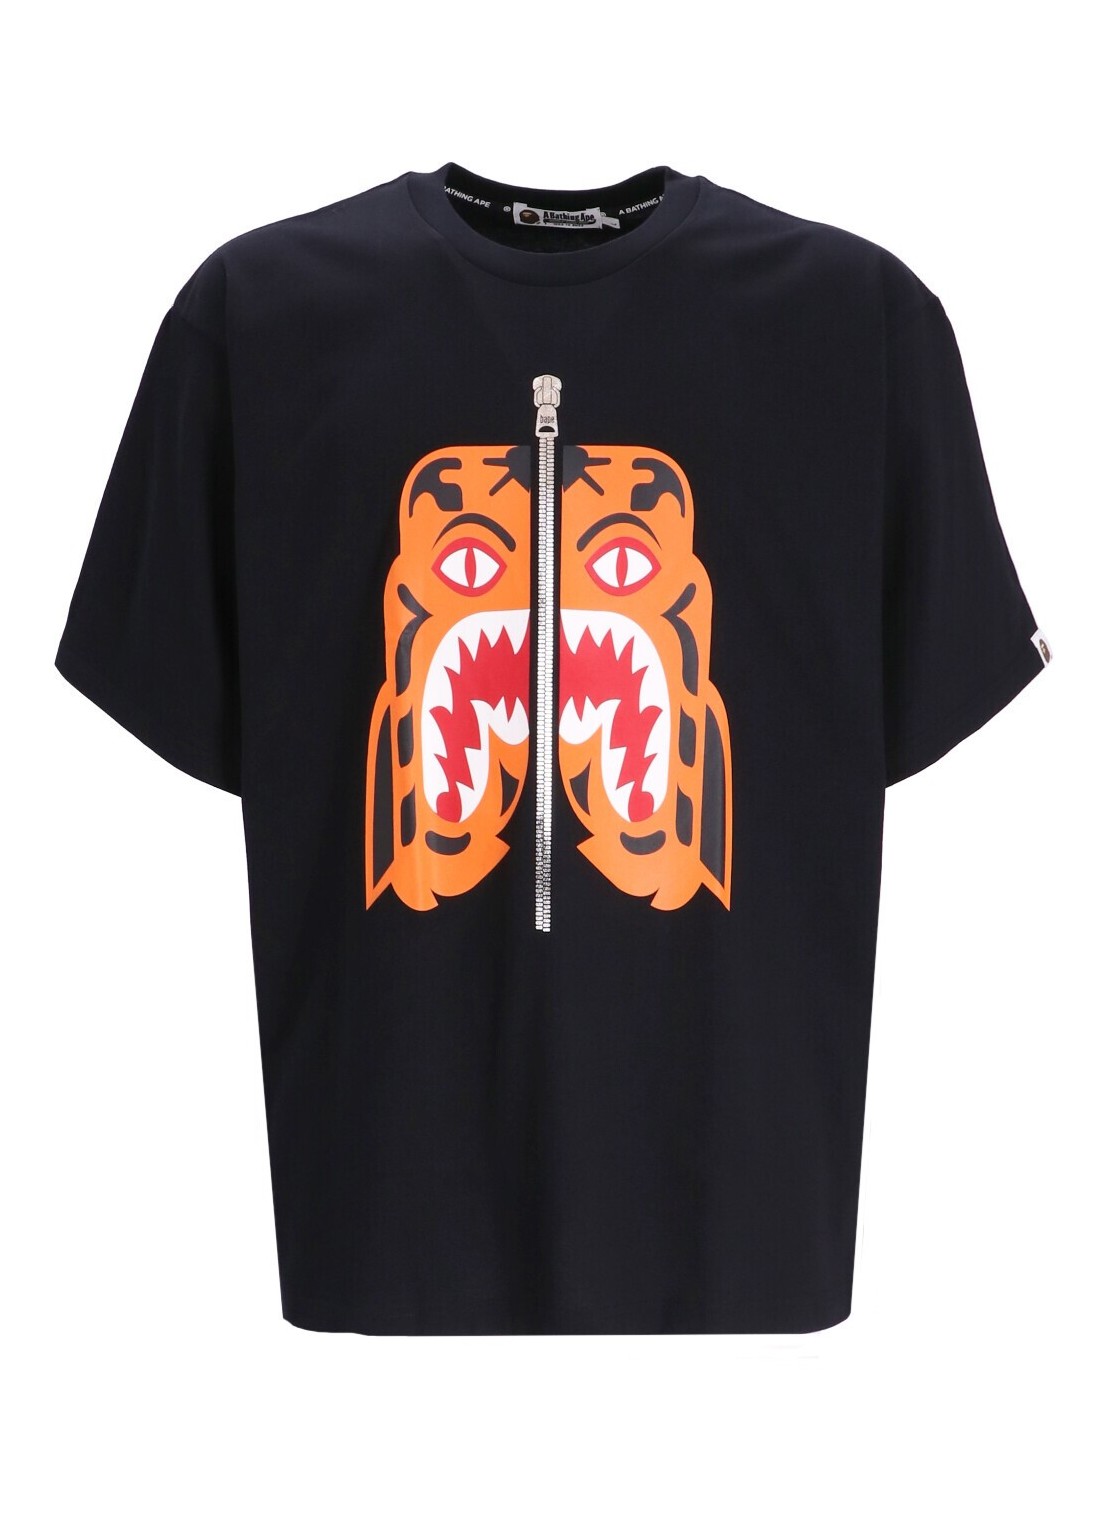 Camiseta bape t-shirt man tiger relaxed fit tee m 001csi801012m black talla XXL
 